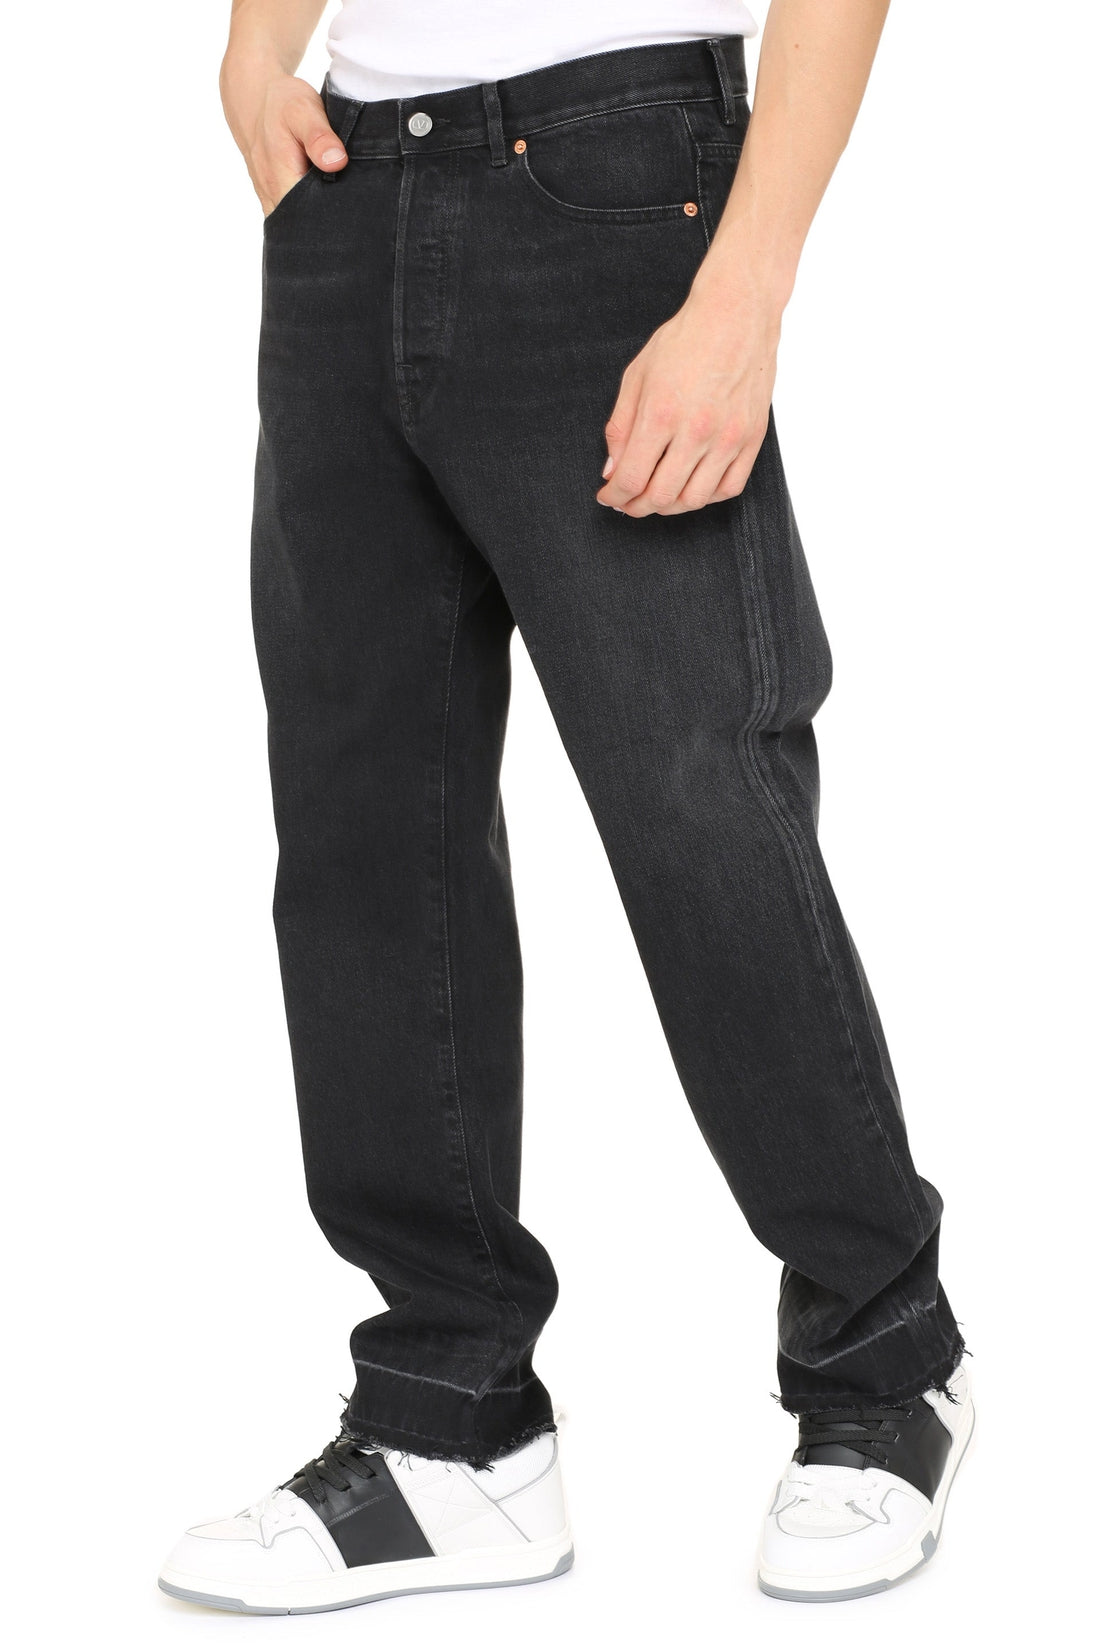 Valentino-OUTLET-SALE-Straight leg jeans-ARCHIVIST